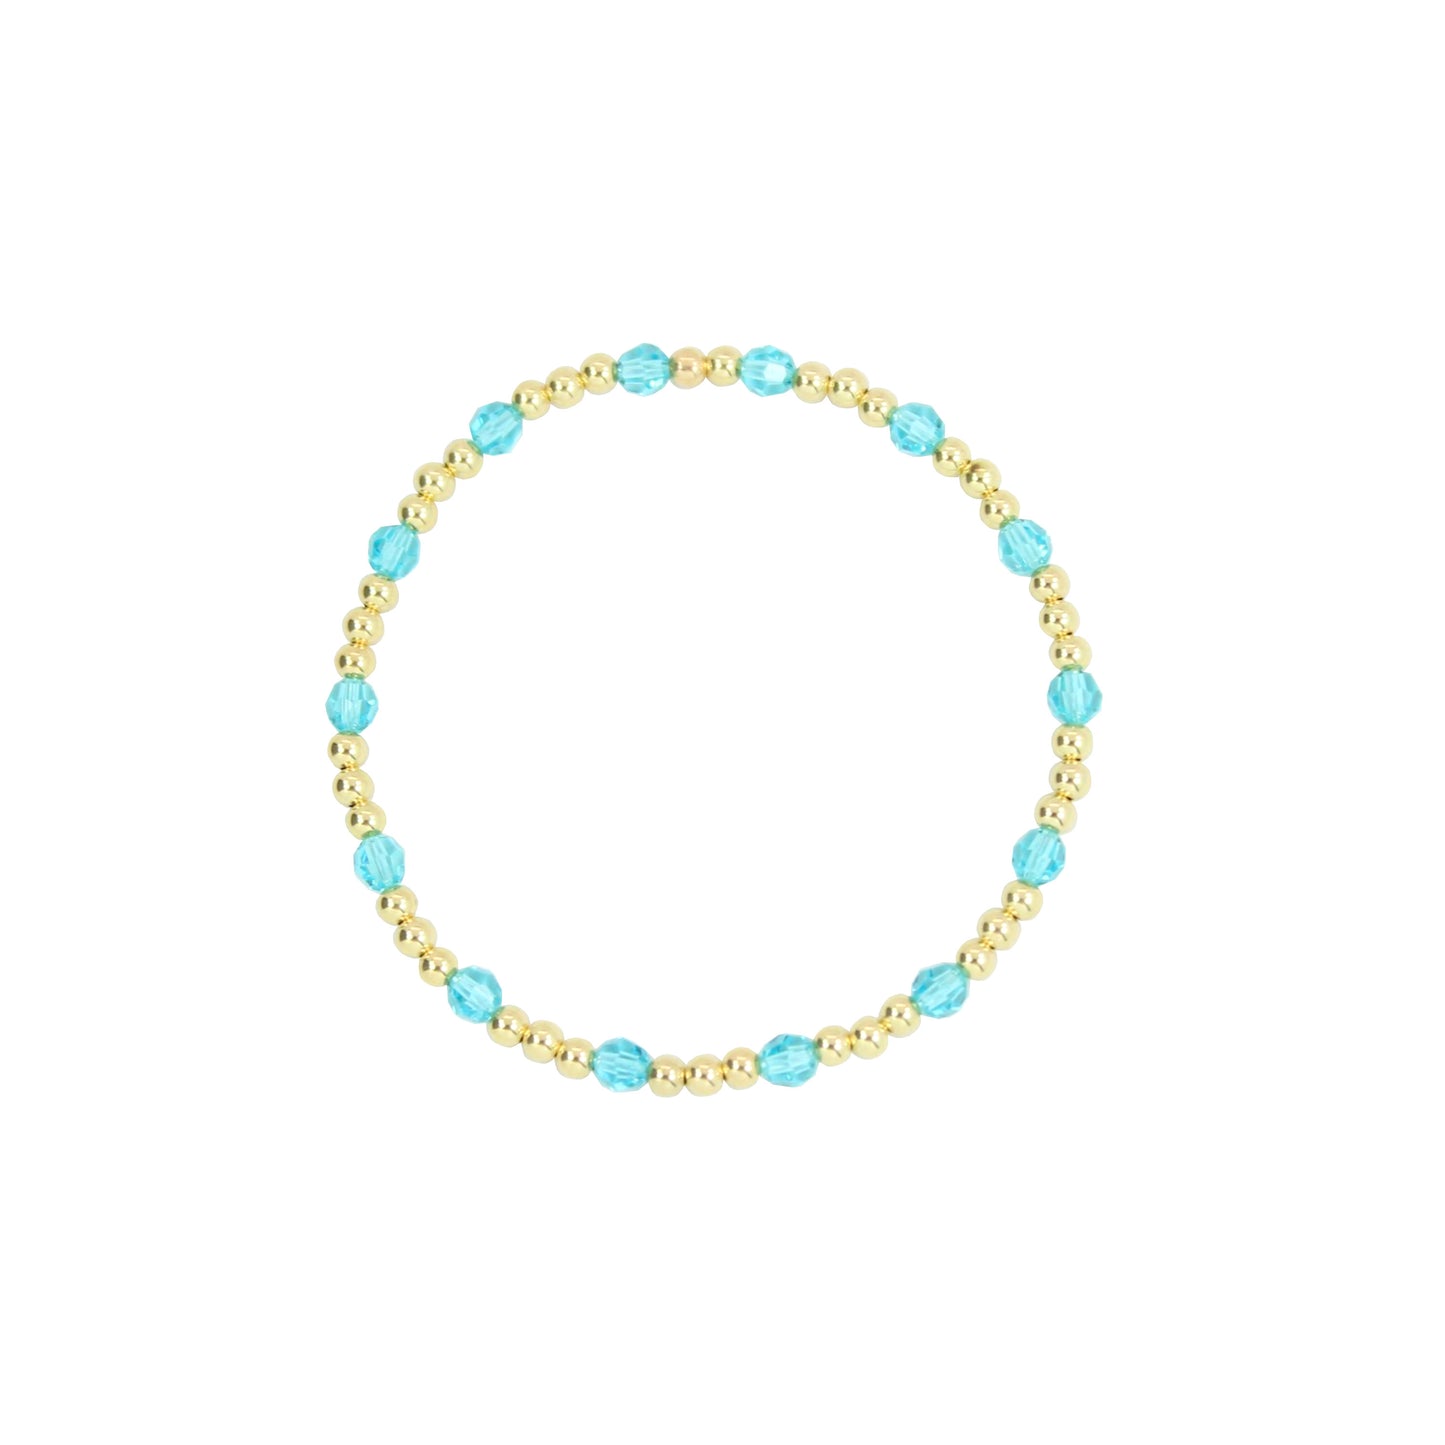 Stretchy December Birthstone Adult Dotted Bracelet (3MM + 4MM beads)